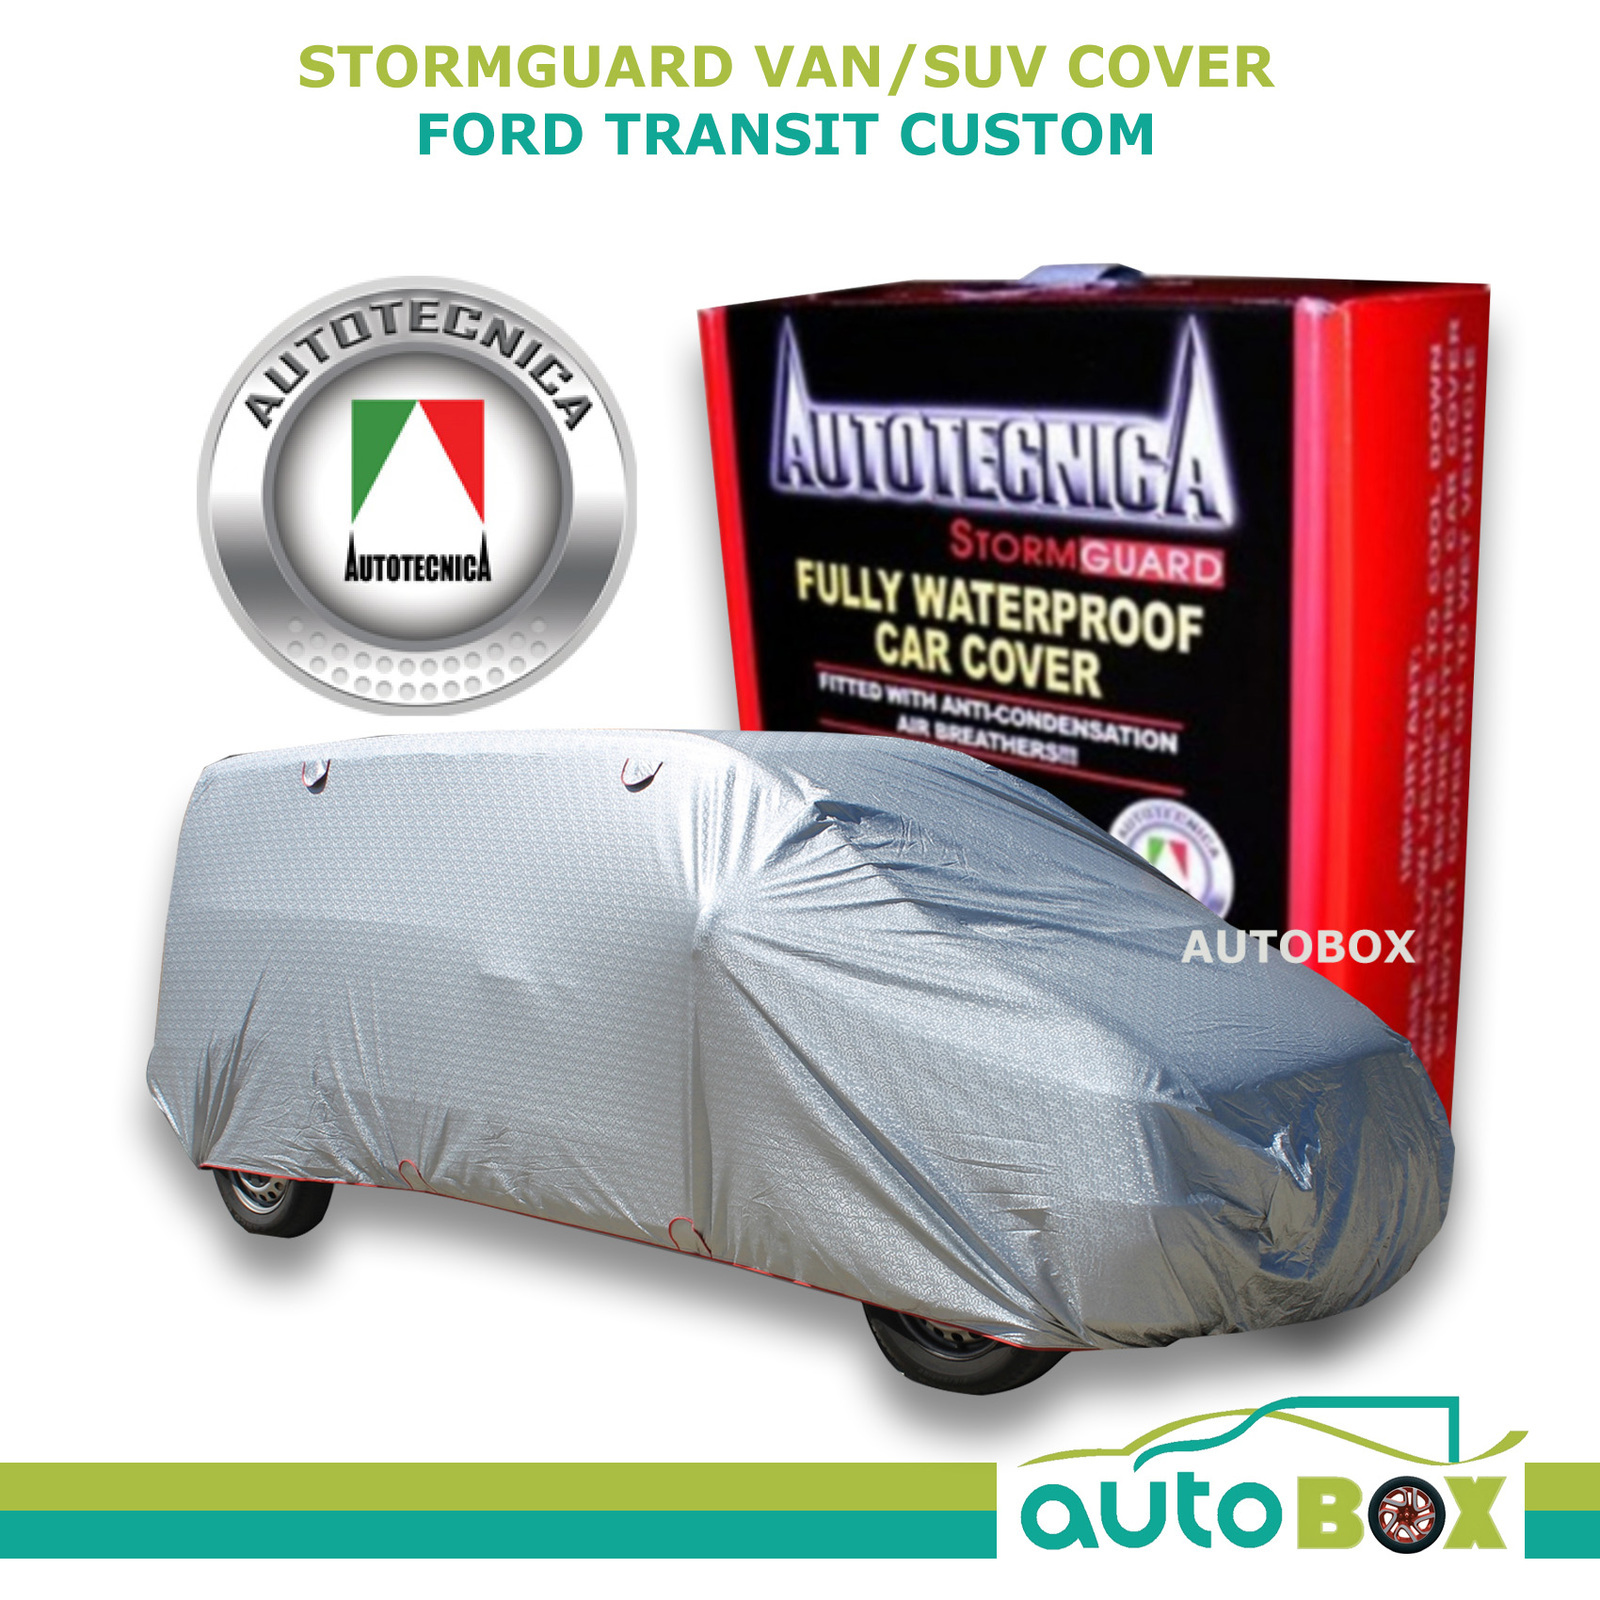 Autotecnica Van Cover Stormguard Fully Waterproof Ford Transit